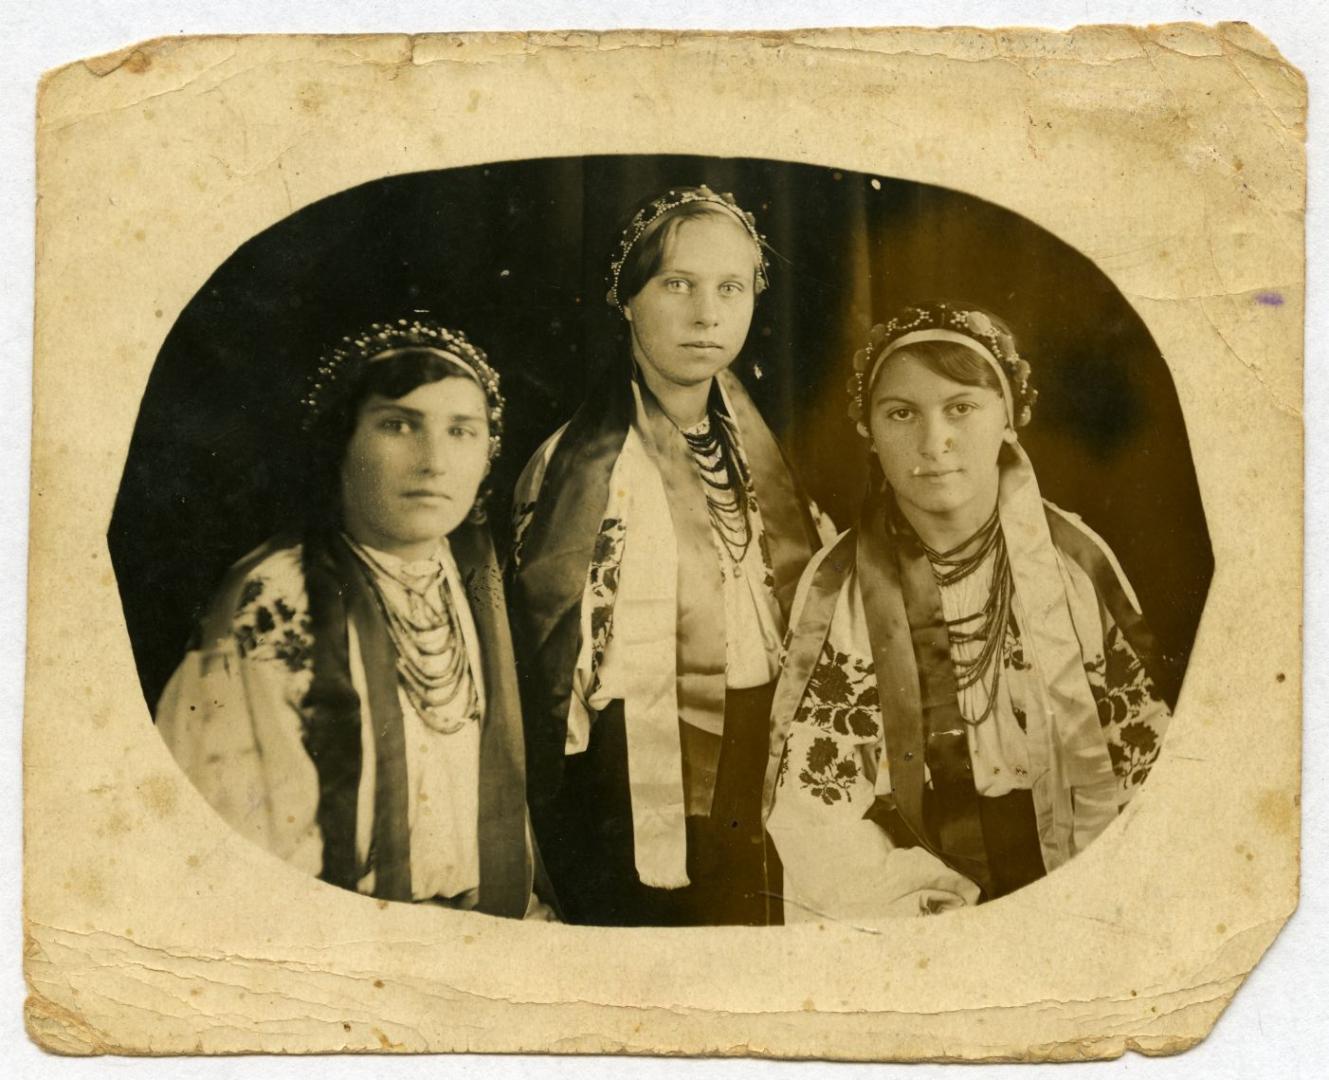 Photo. Three girls wearing festive folk attire